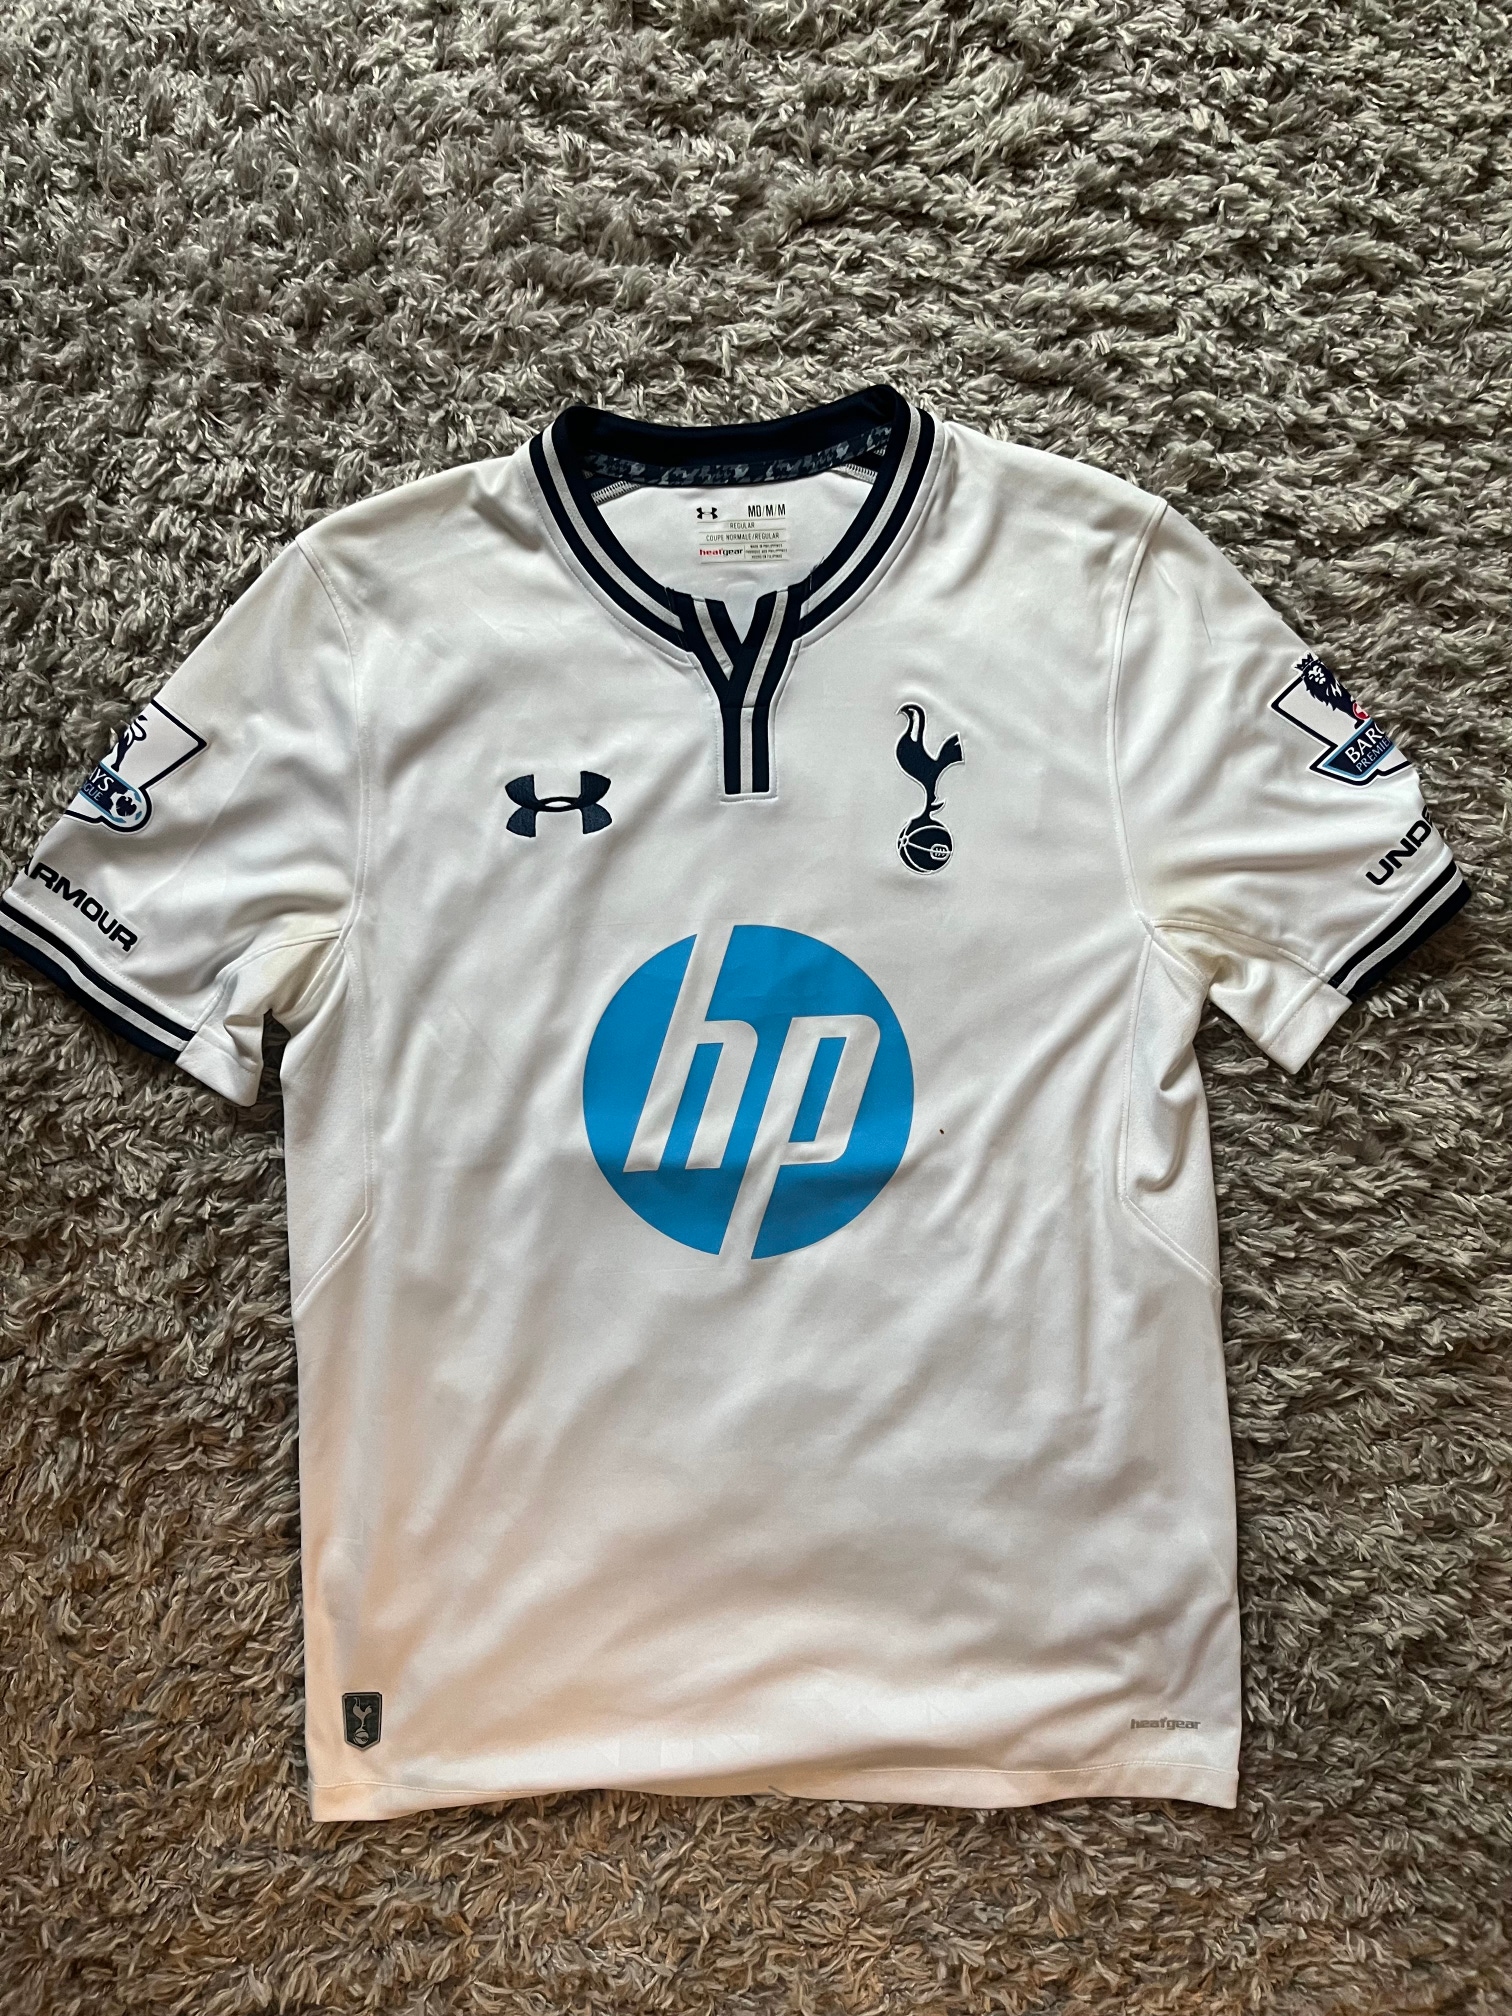 Tottenham 2013-14 Authentic Under Armour Home Jersey - Size M